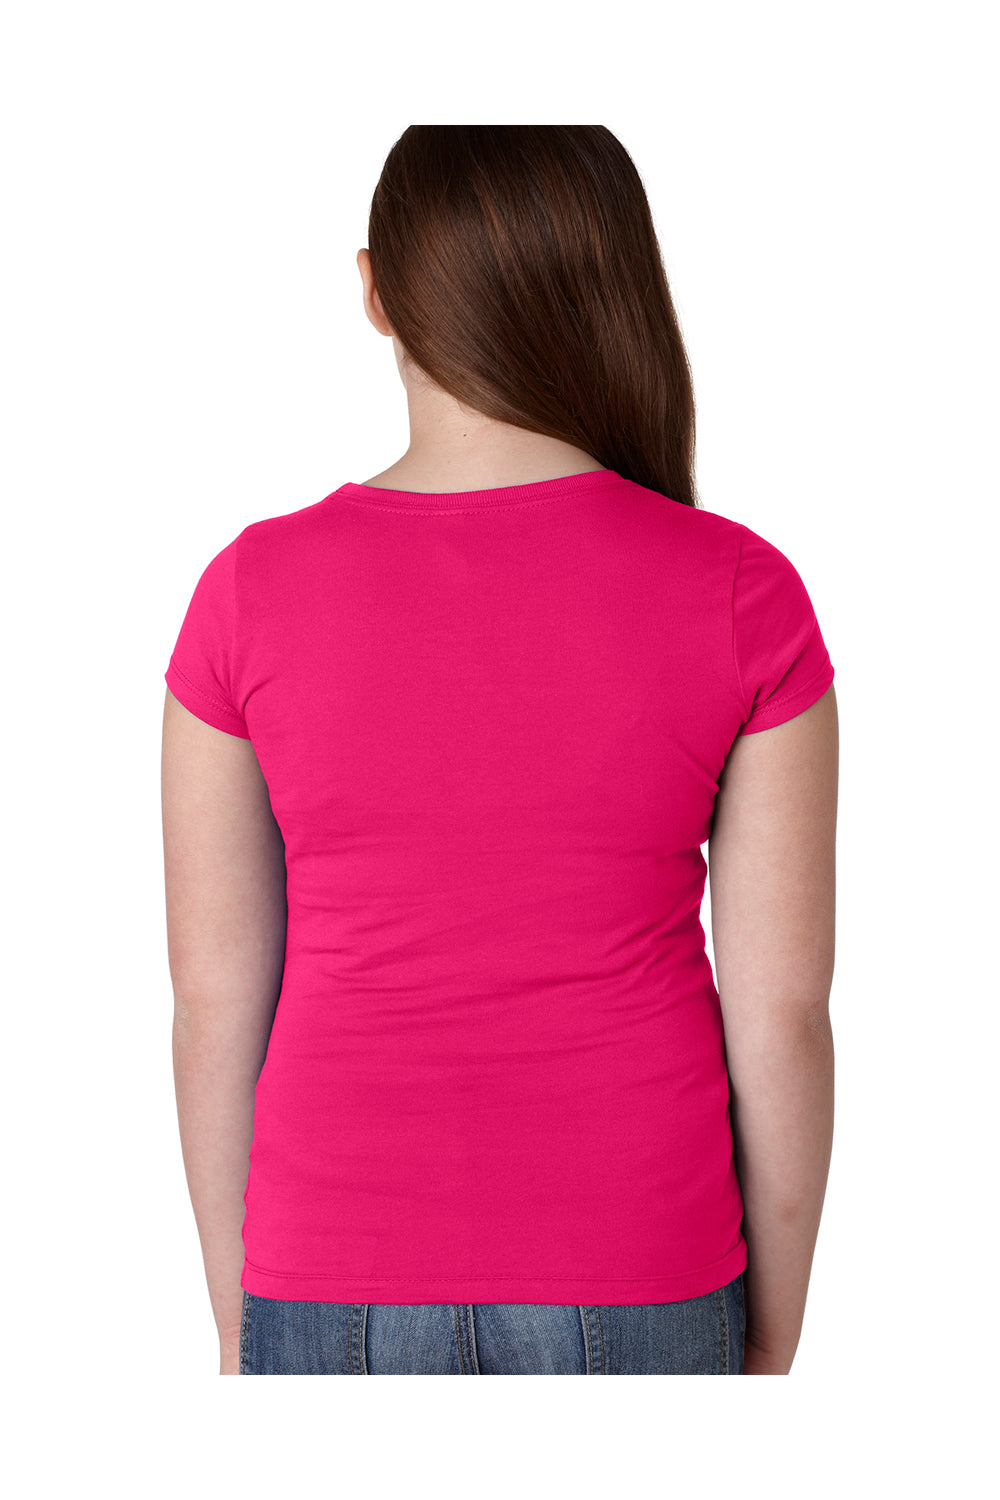 Next Level N3710 Youth Princess Fine Jersey Short Sleeve Crewneck T-Shirt Raspberry Pink Back